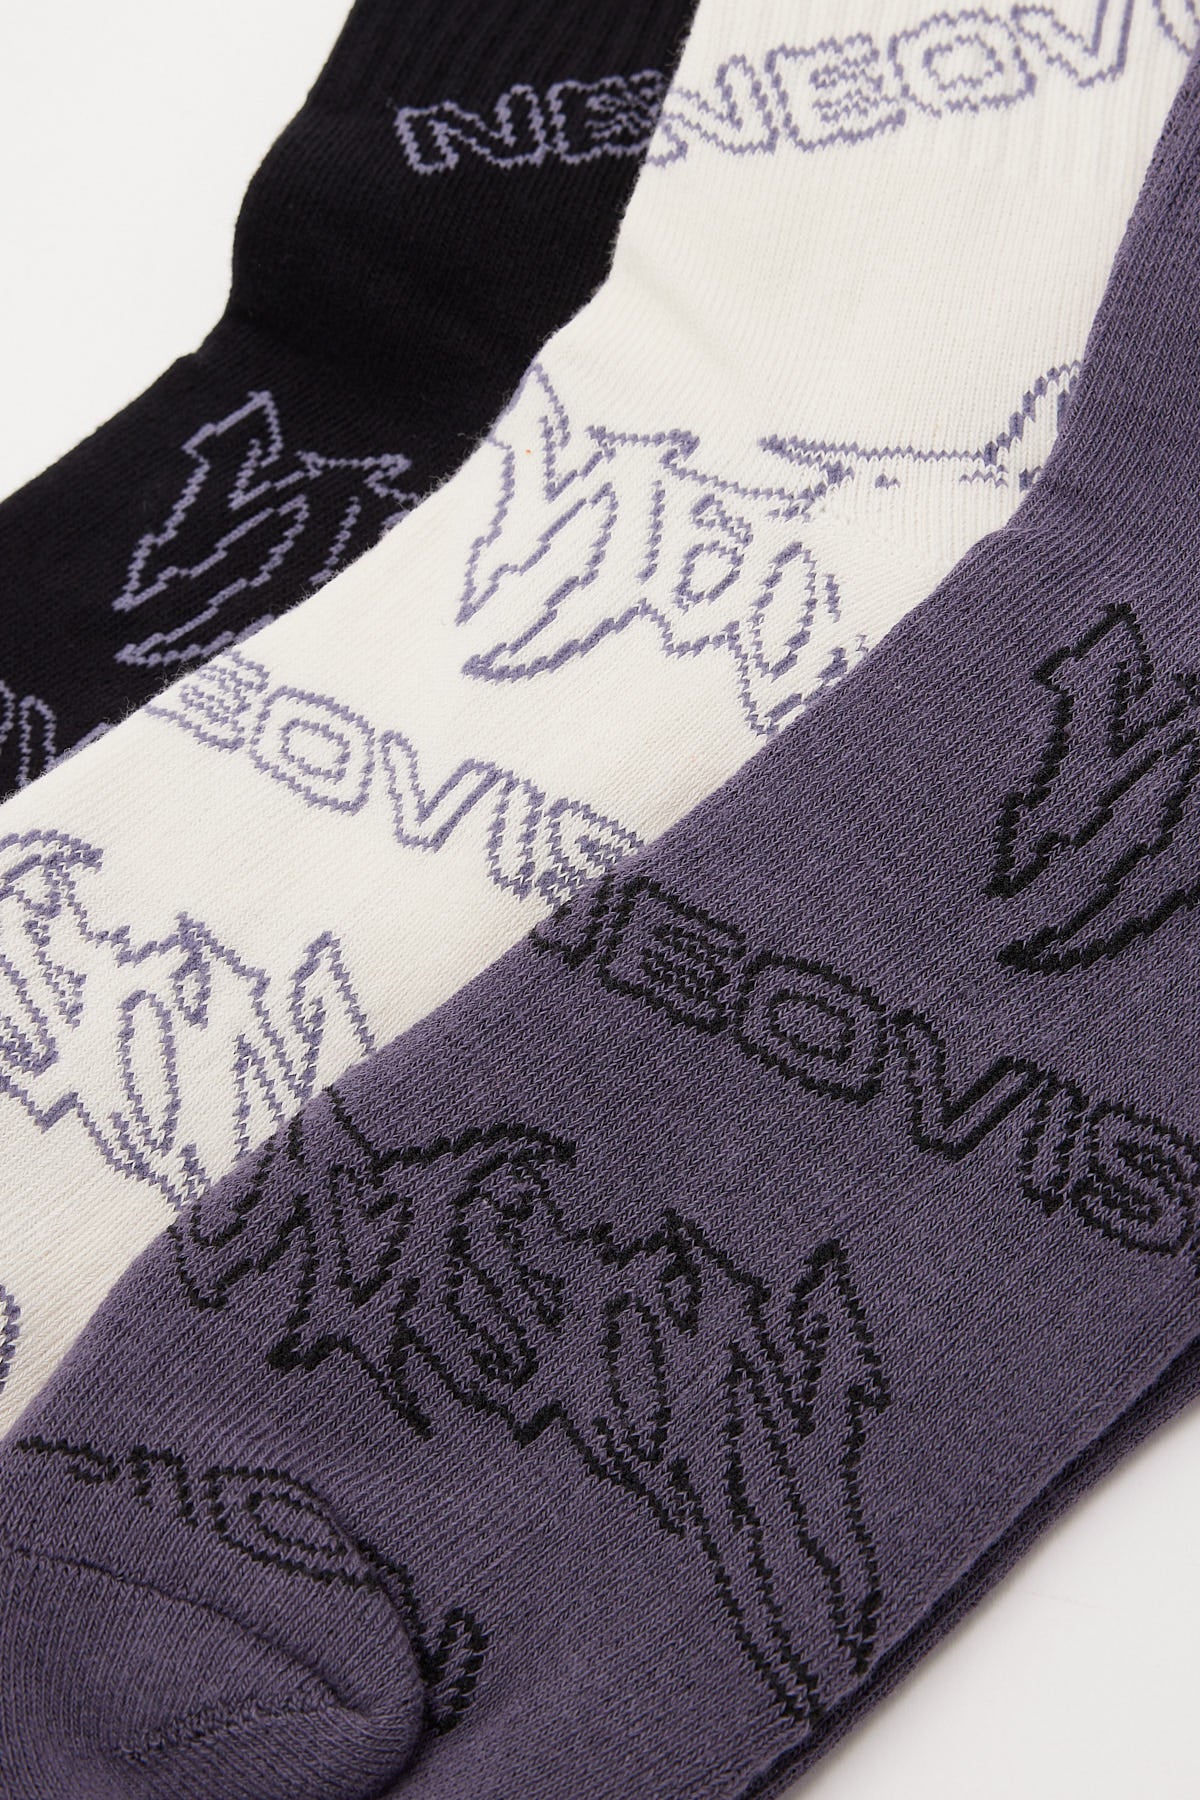 Neovision Viable Sock 3 Pack Black/Purple/White